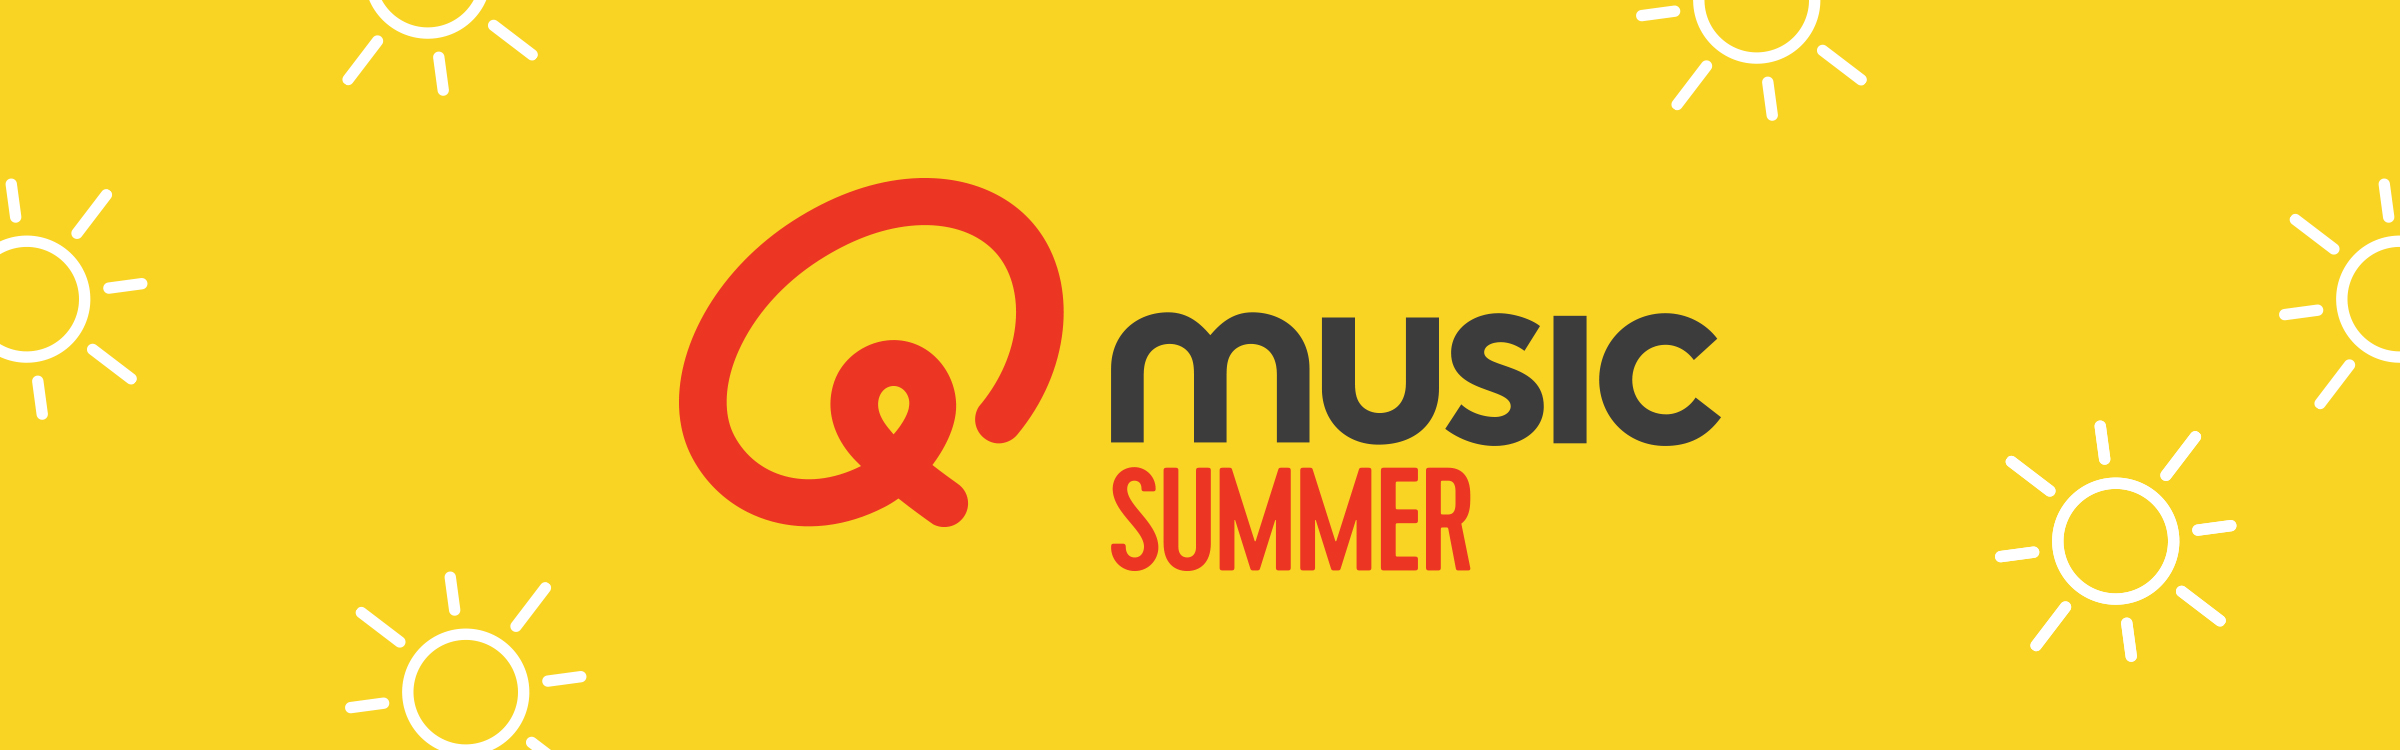 Qmusic actionheader summer